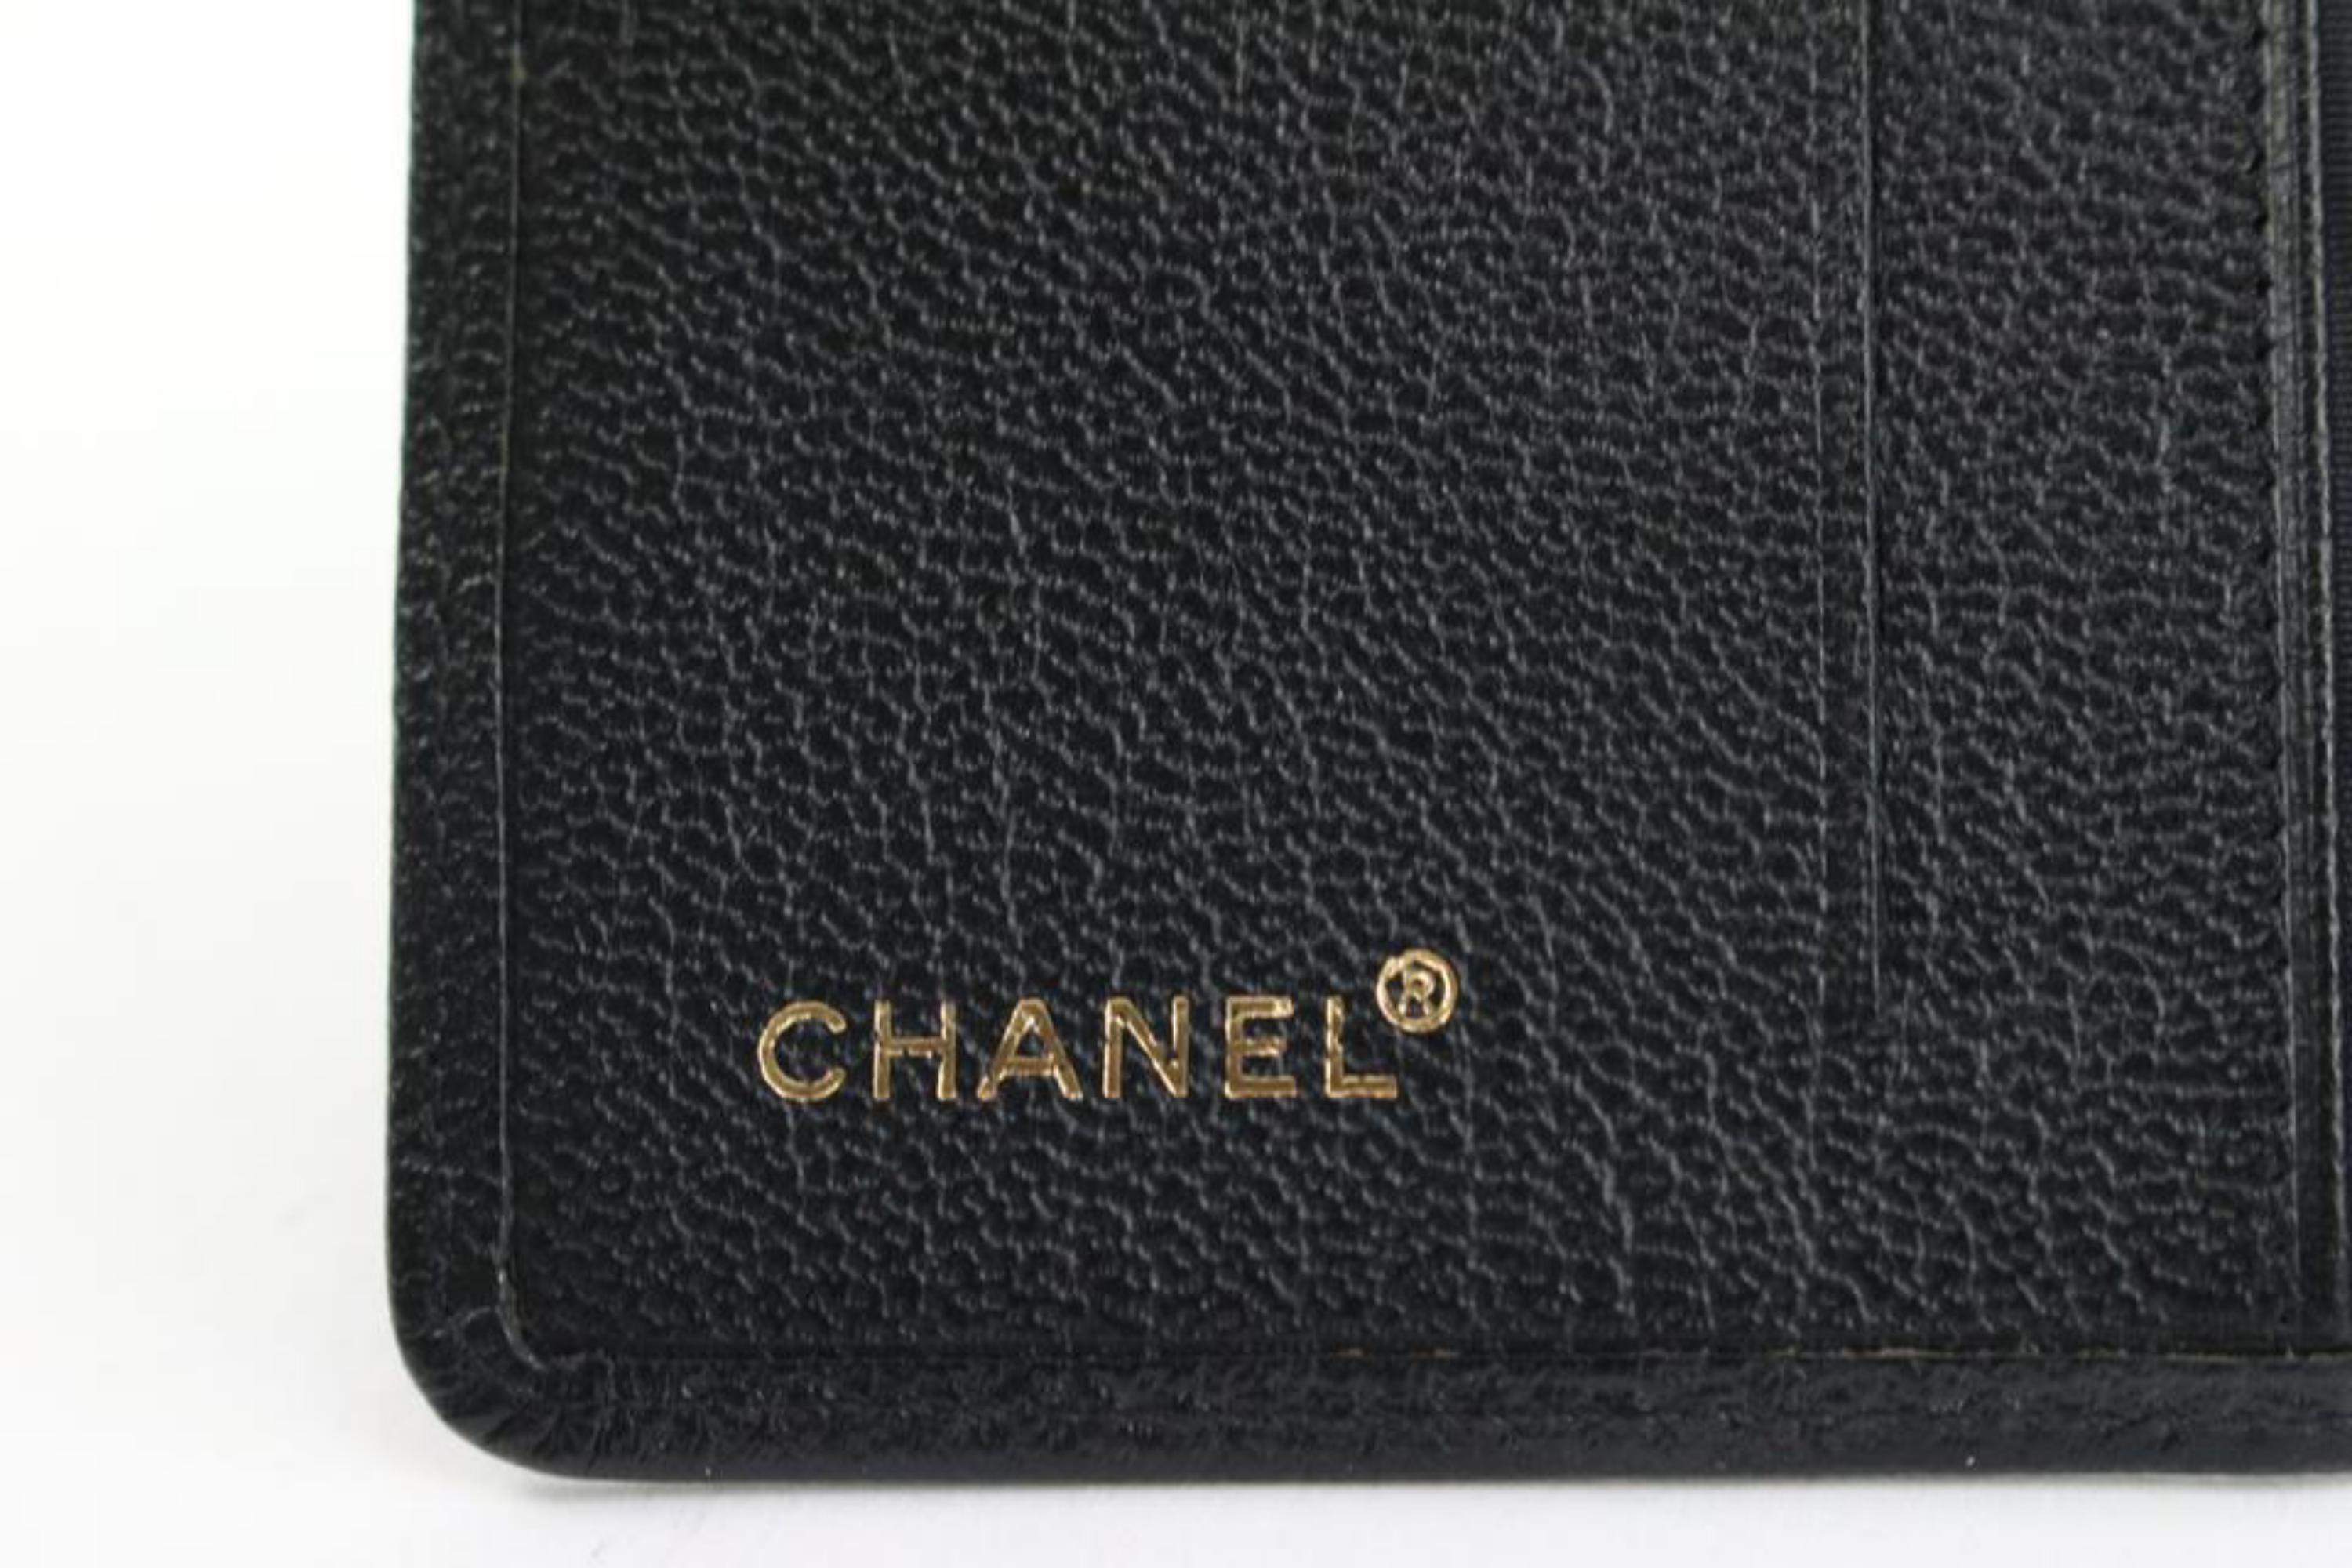 Chanel Black Calfskin Leather CC Card Holder Wallet Case 64ck225s 4